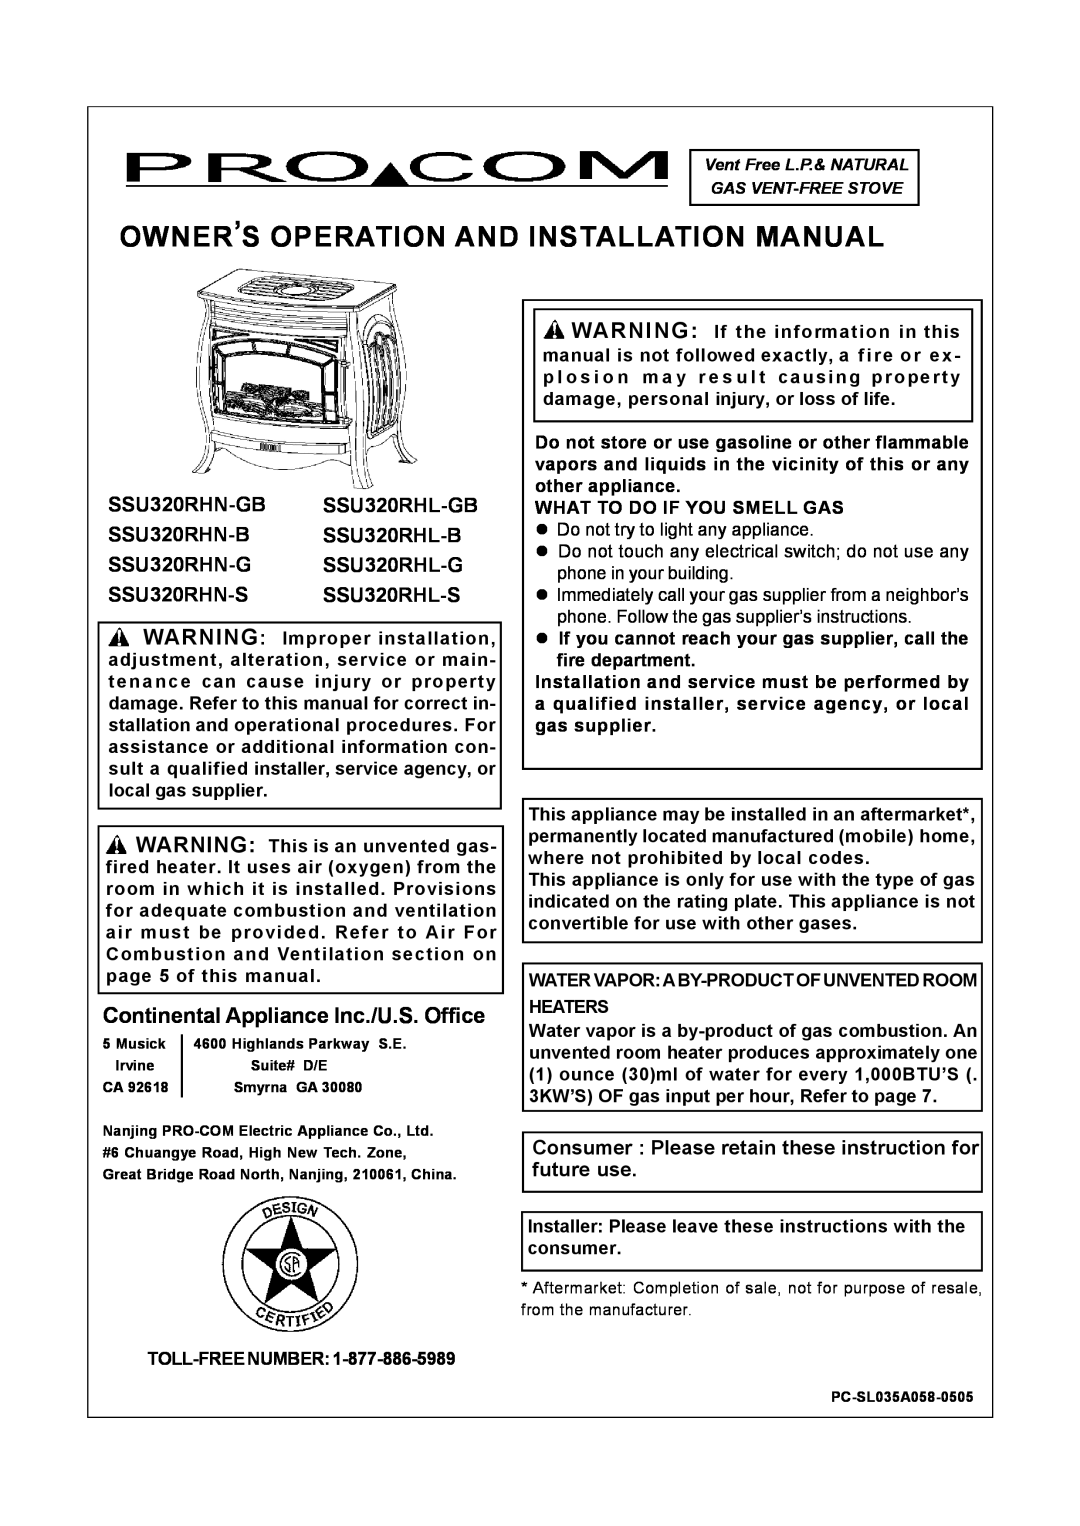 Procom SSU320RHN-S installation manual Continental Appliance Inc./U.S. Office, Owner’S Operation And Installation Manual 